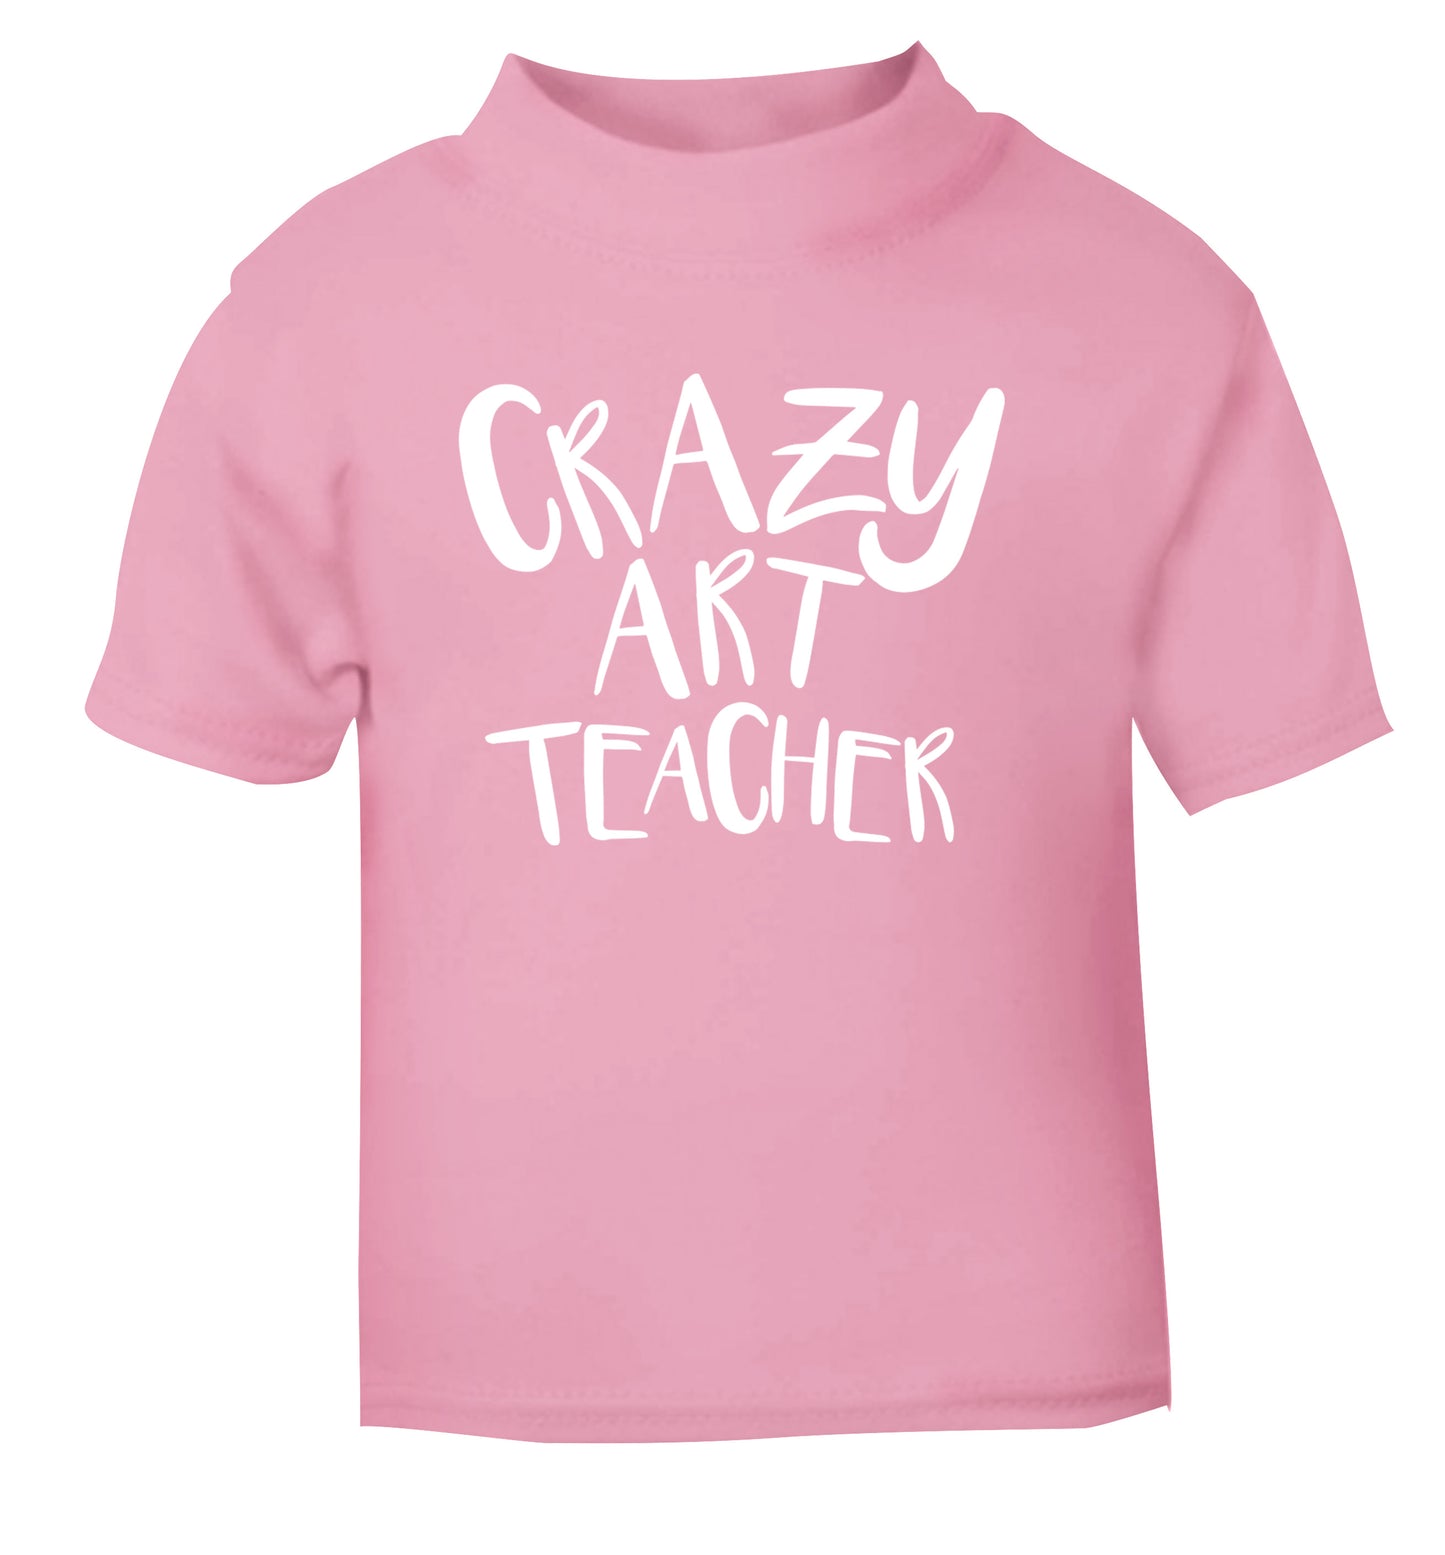 Crazy art teacher light pink Baby Toddler Tshirt 2 Years